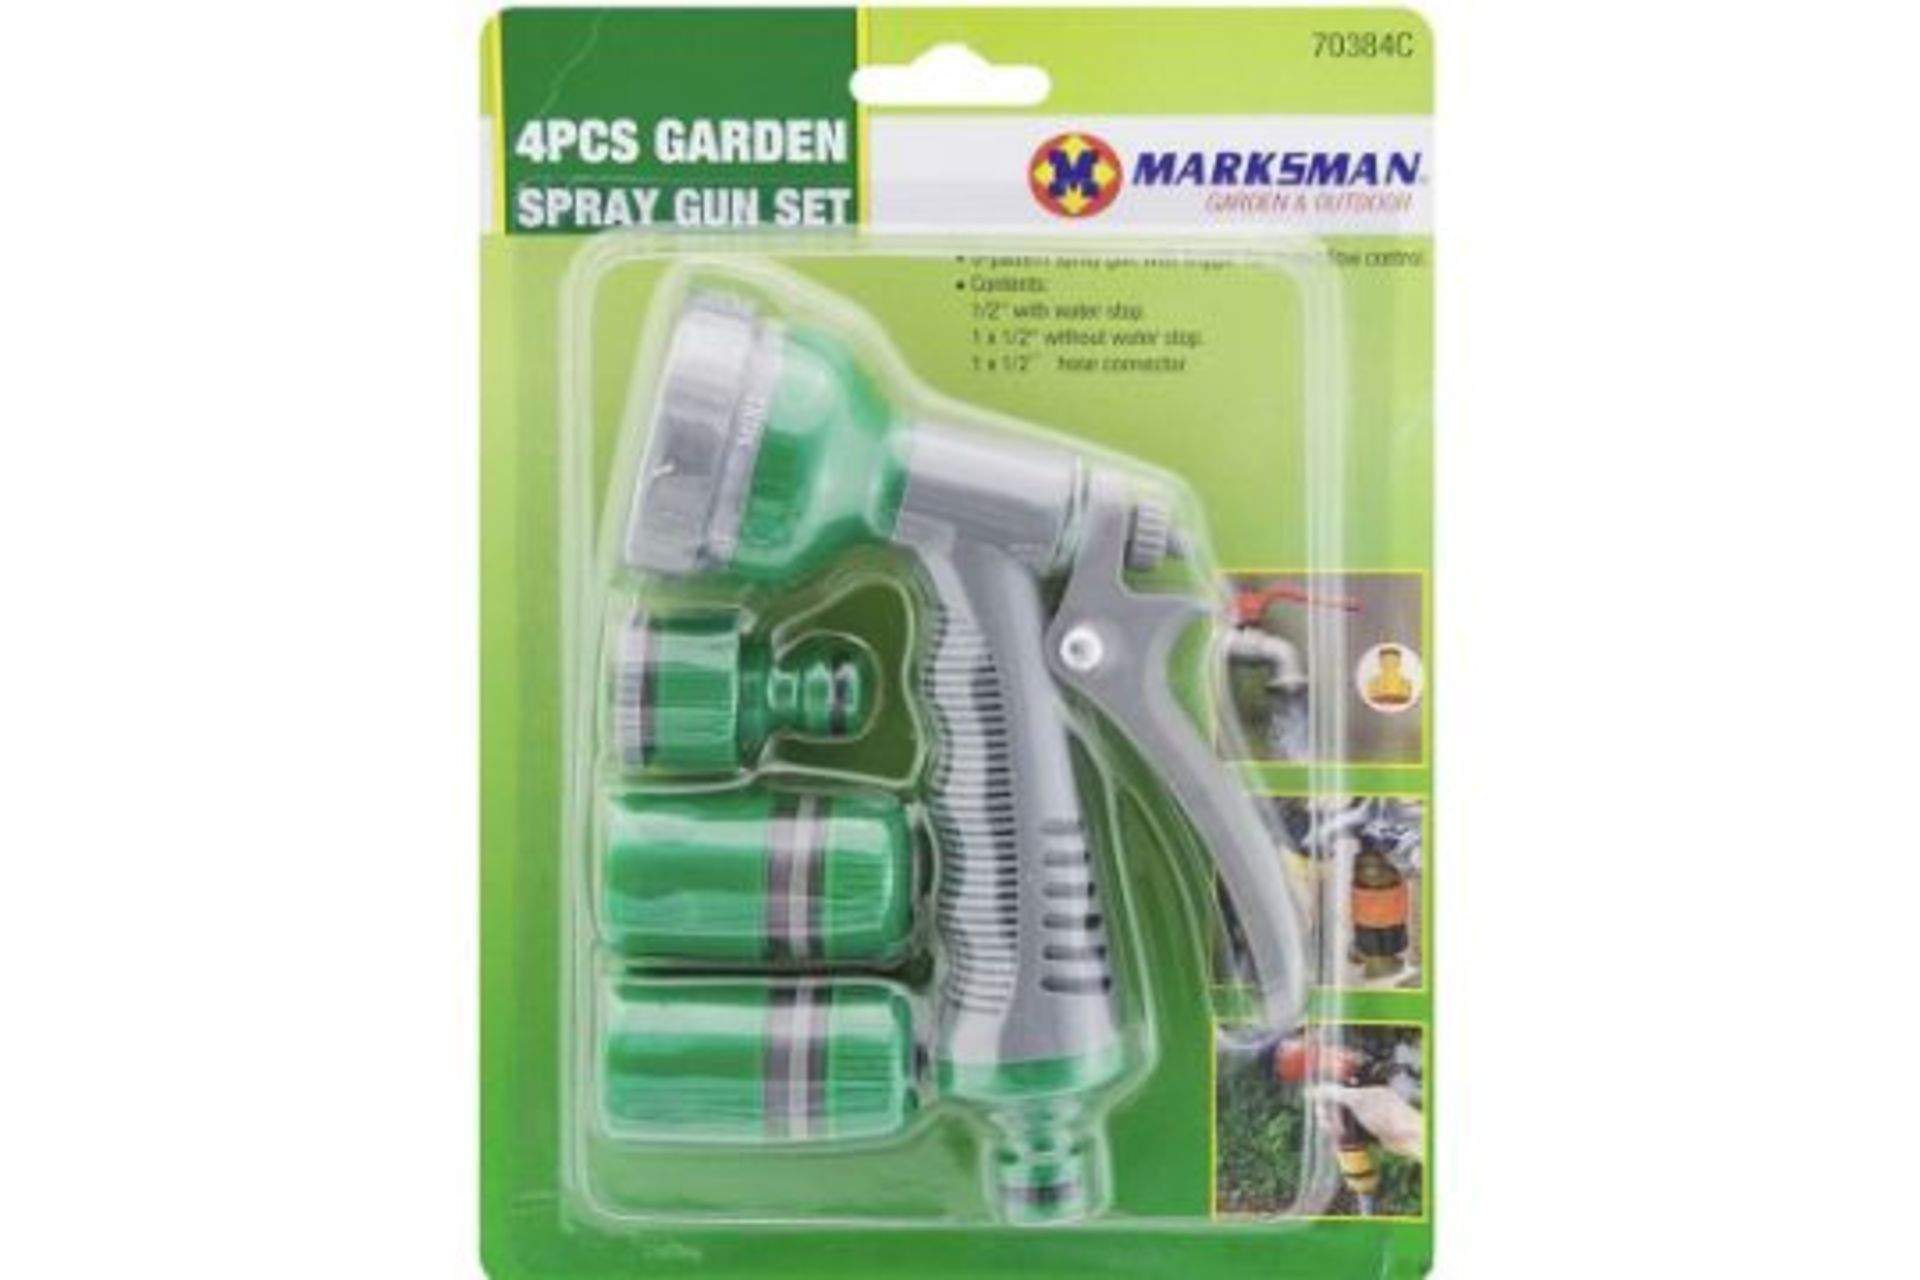 New 4pcs Garden Spray Gun Set